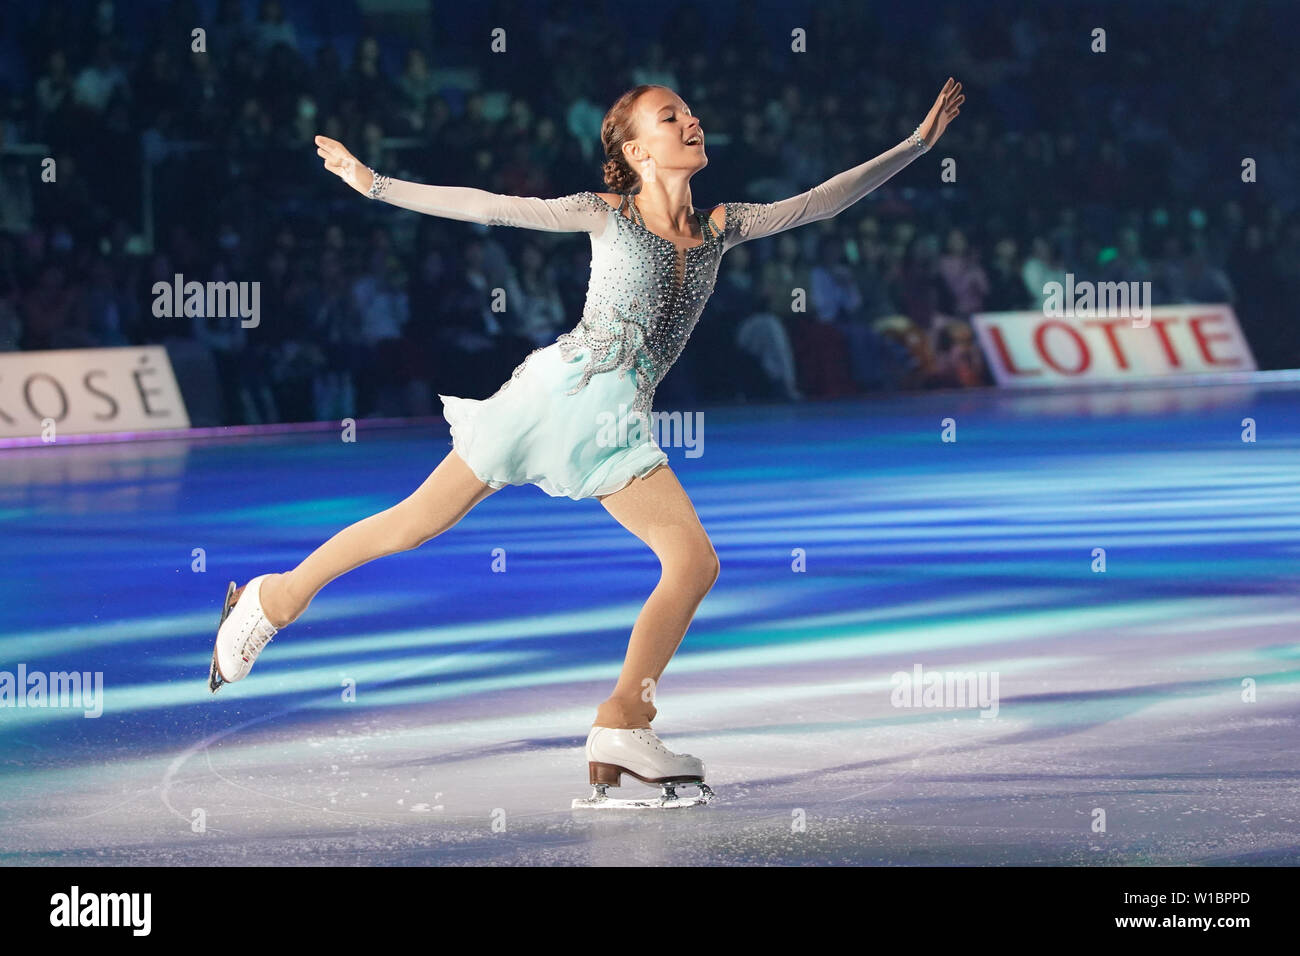 Anna Shcherbakova of Russia performs during the Dream On Ice 2019 at Shinyokohama Skate Center in Kanagawa, Japan, on June 28, 2019